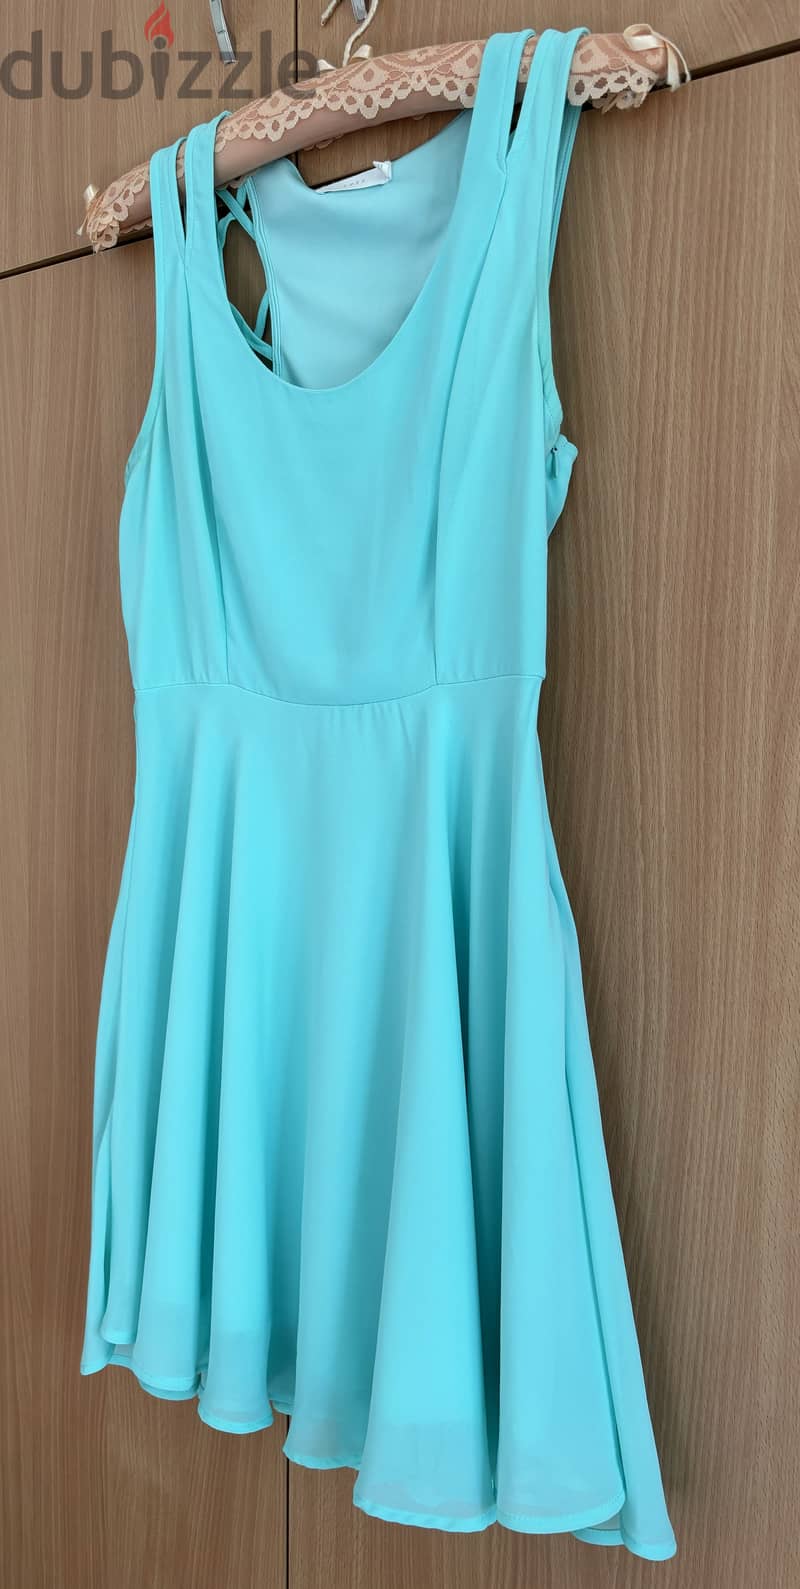 Aqua dress 1